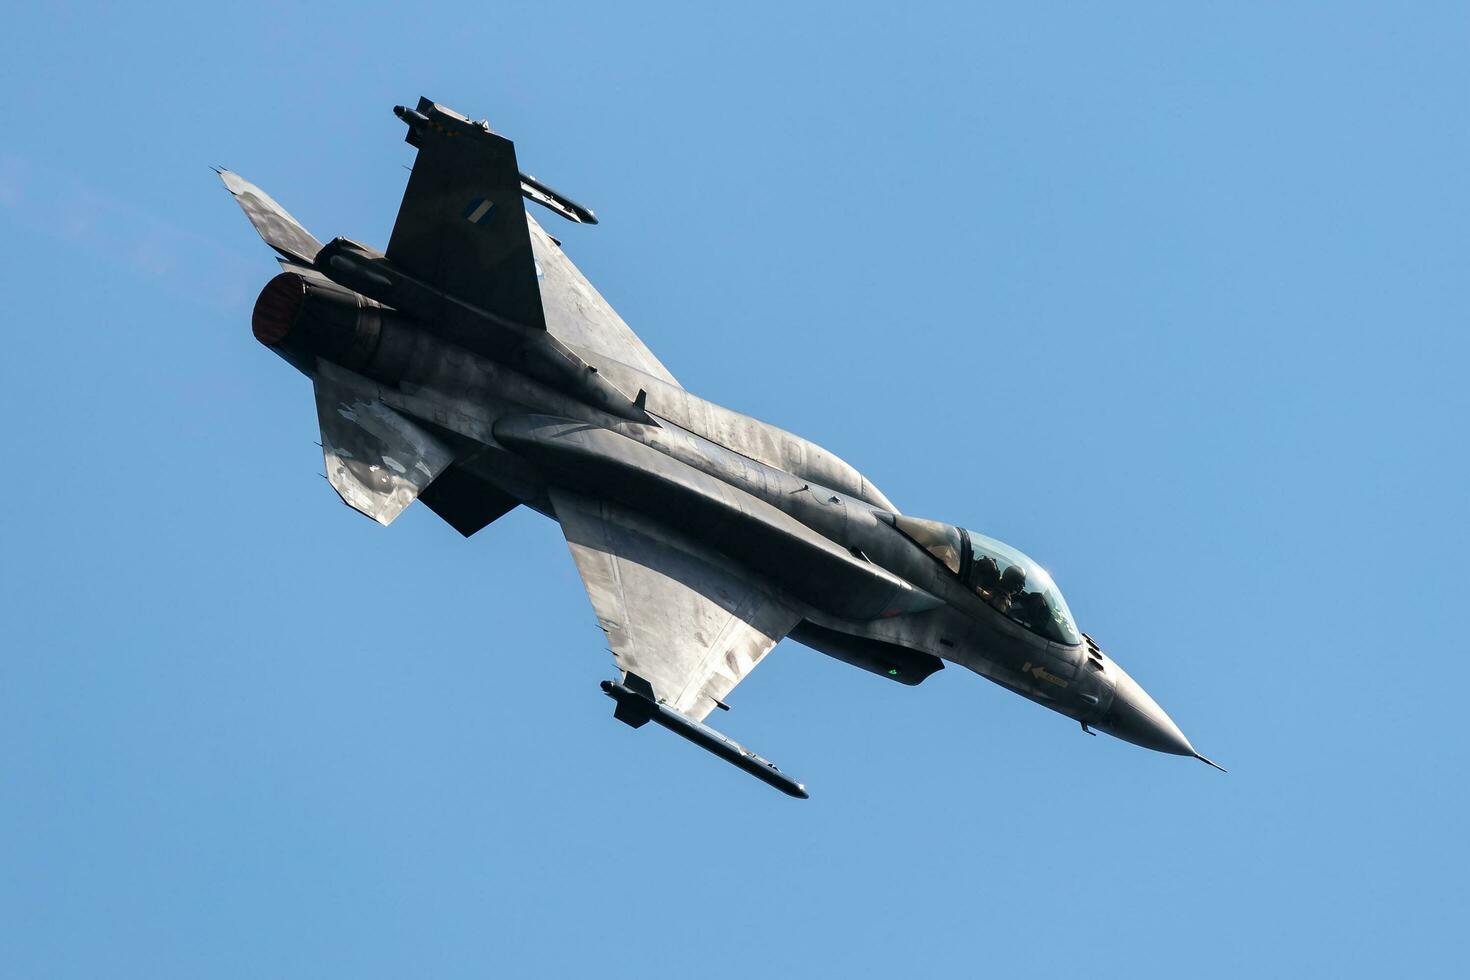 Helleens lucht dwingen lockheed f-16 vechten valk vechter Jet vlak vliegen. luchtvaart en leger vliegtuigen. foto